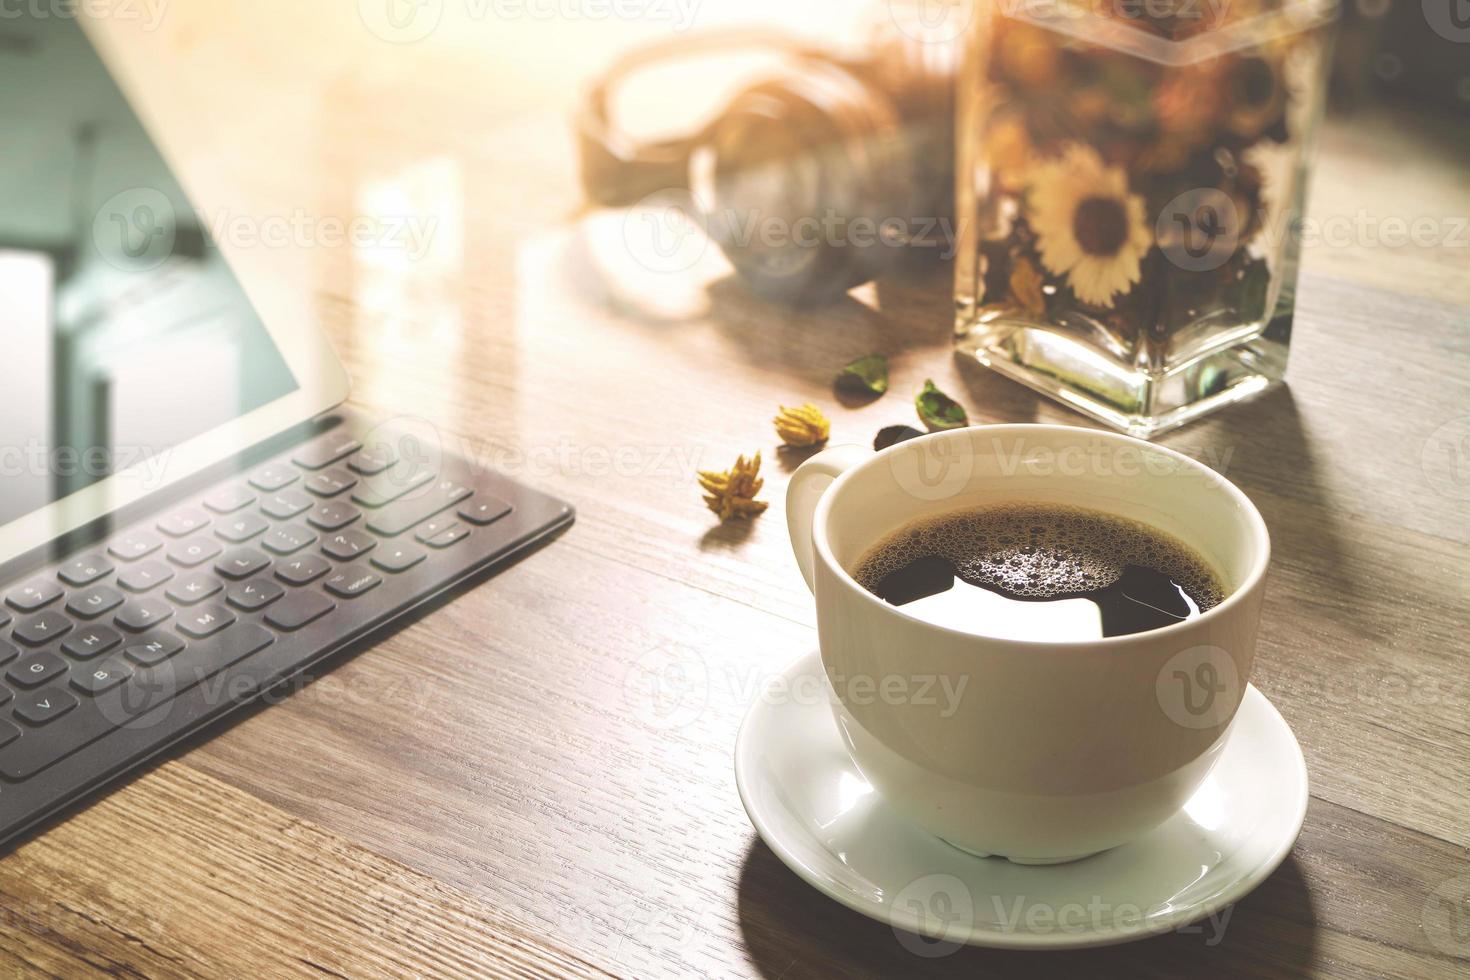 Coffee cup and Digital table dock smart keyboard,vase flower herbs,music headphone,eyeglasses on wooden table,filter effect photo